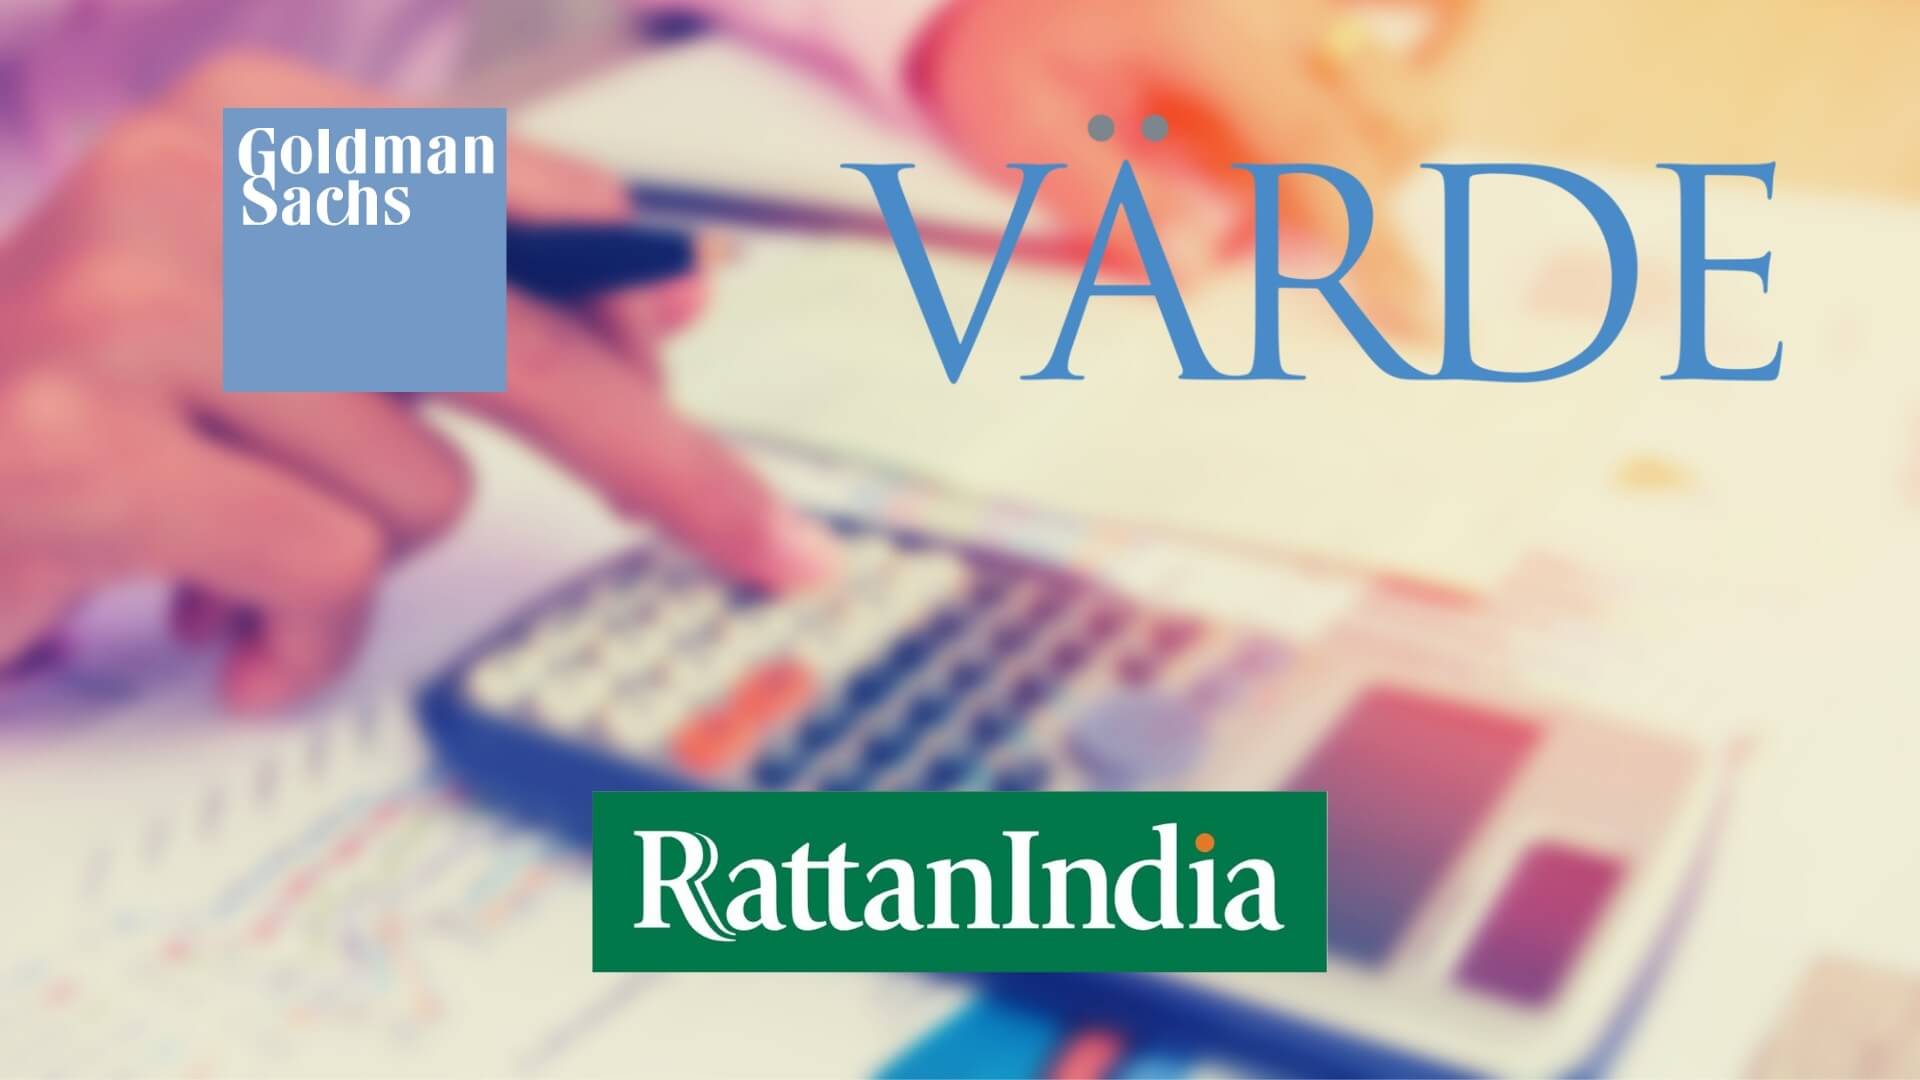 Goldman Sachs, Varde Partners to Acquire RattanIndia’s Debt for Amravati Project